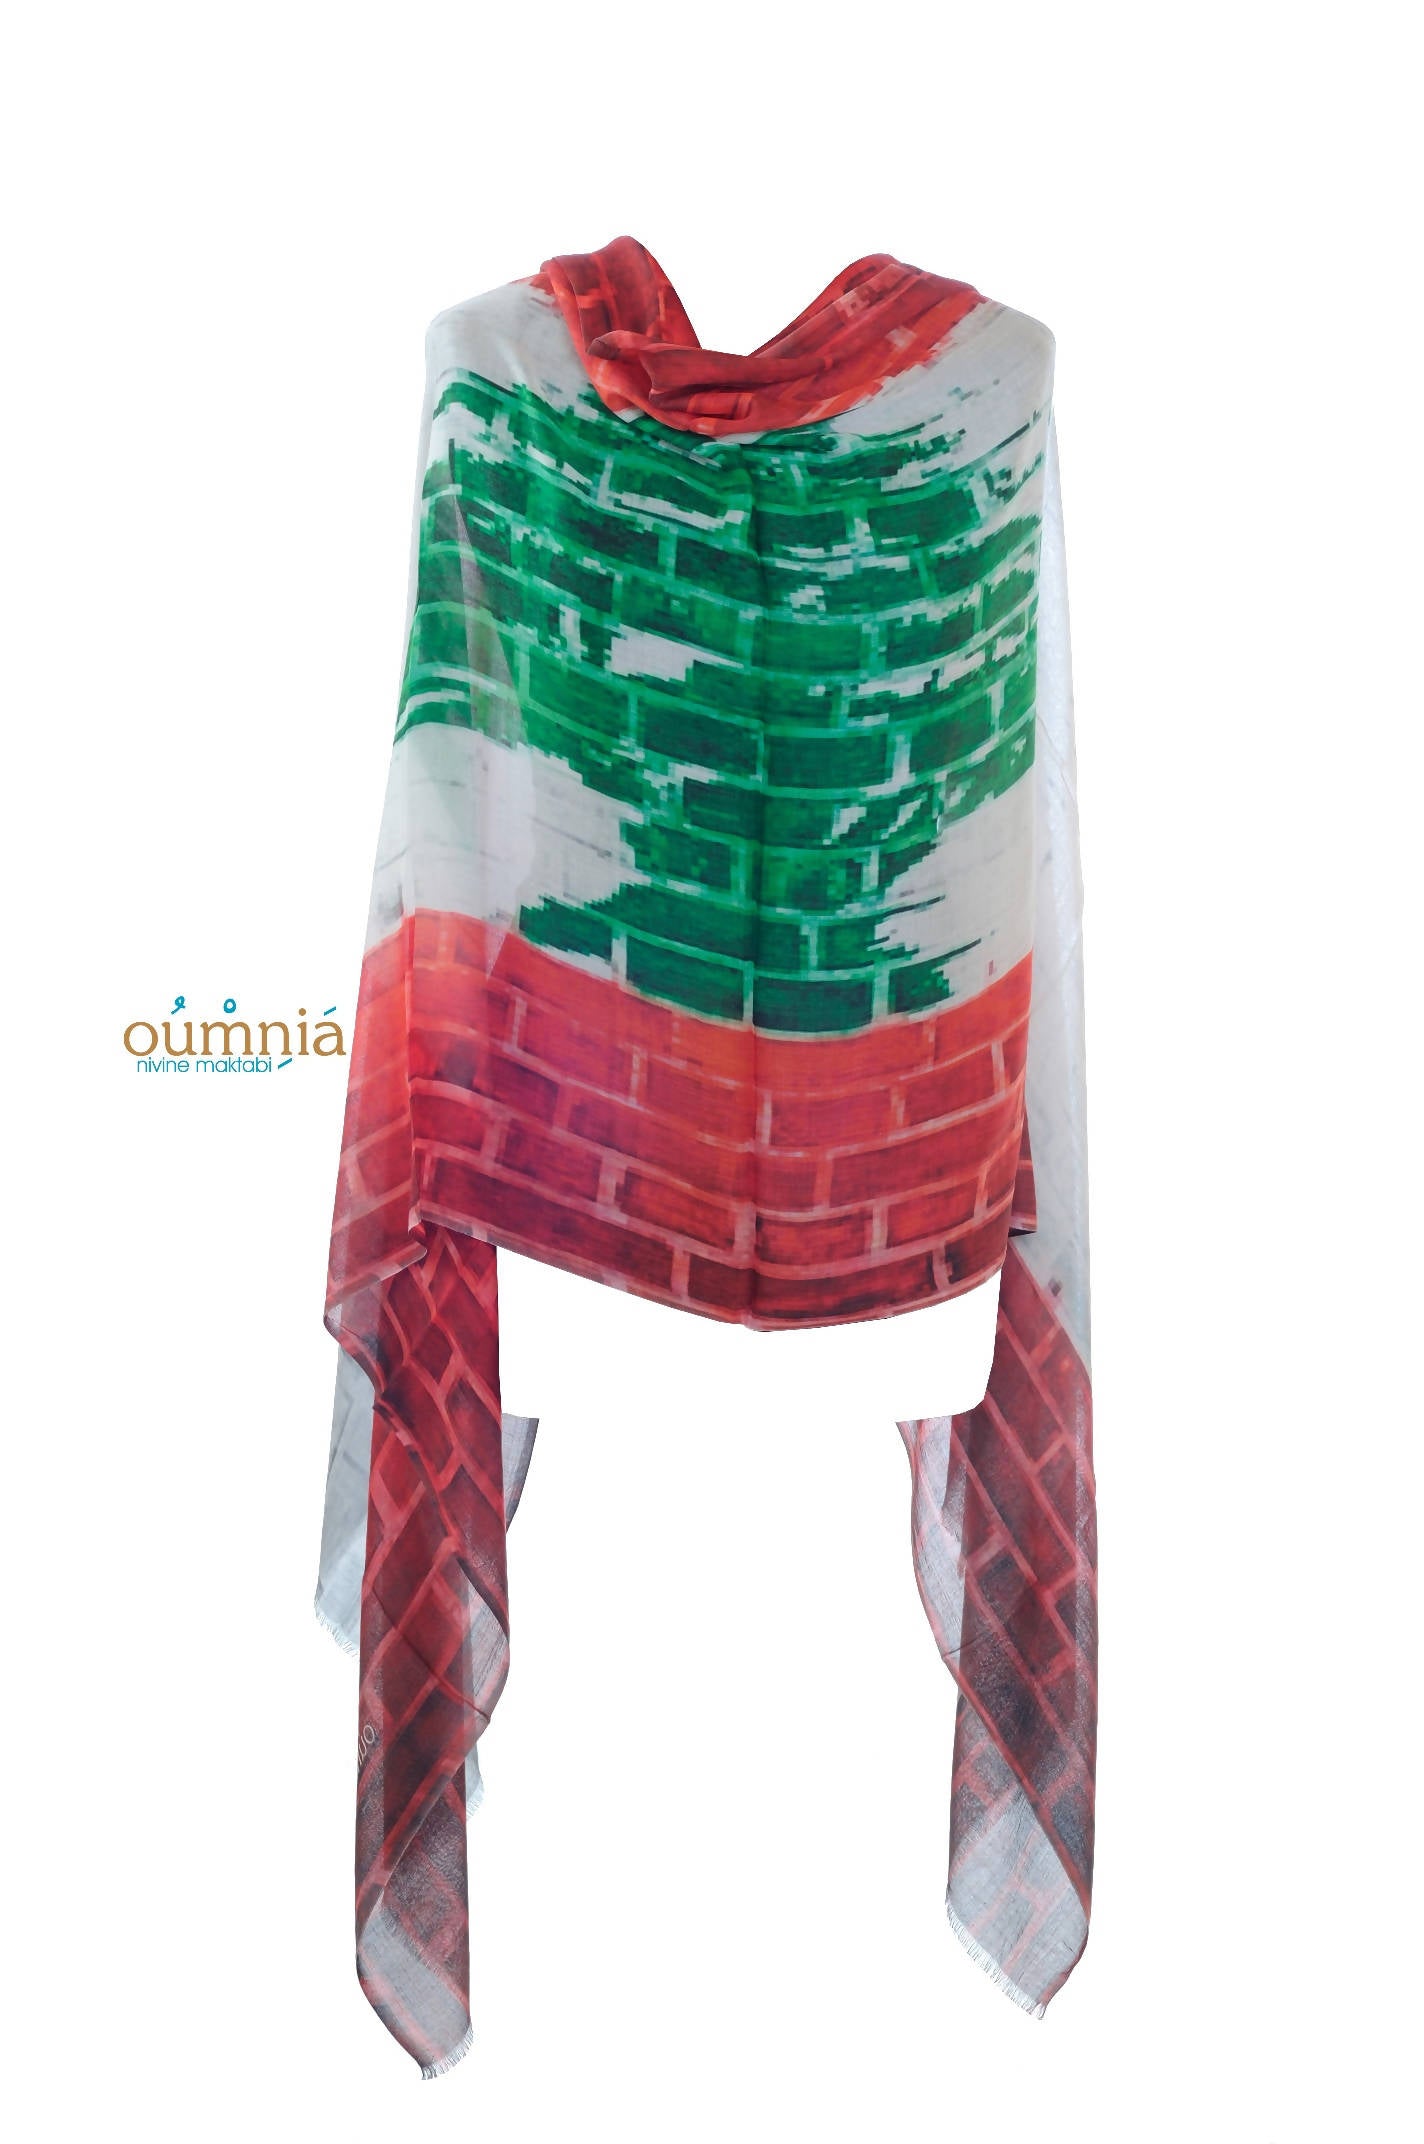 LEBANON FLAG- OUMNIA BY NIVINE MAKTABI